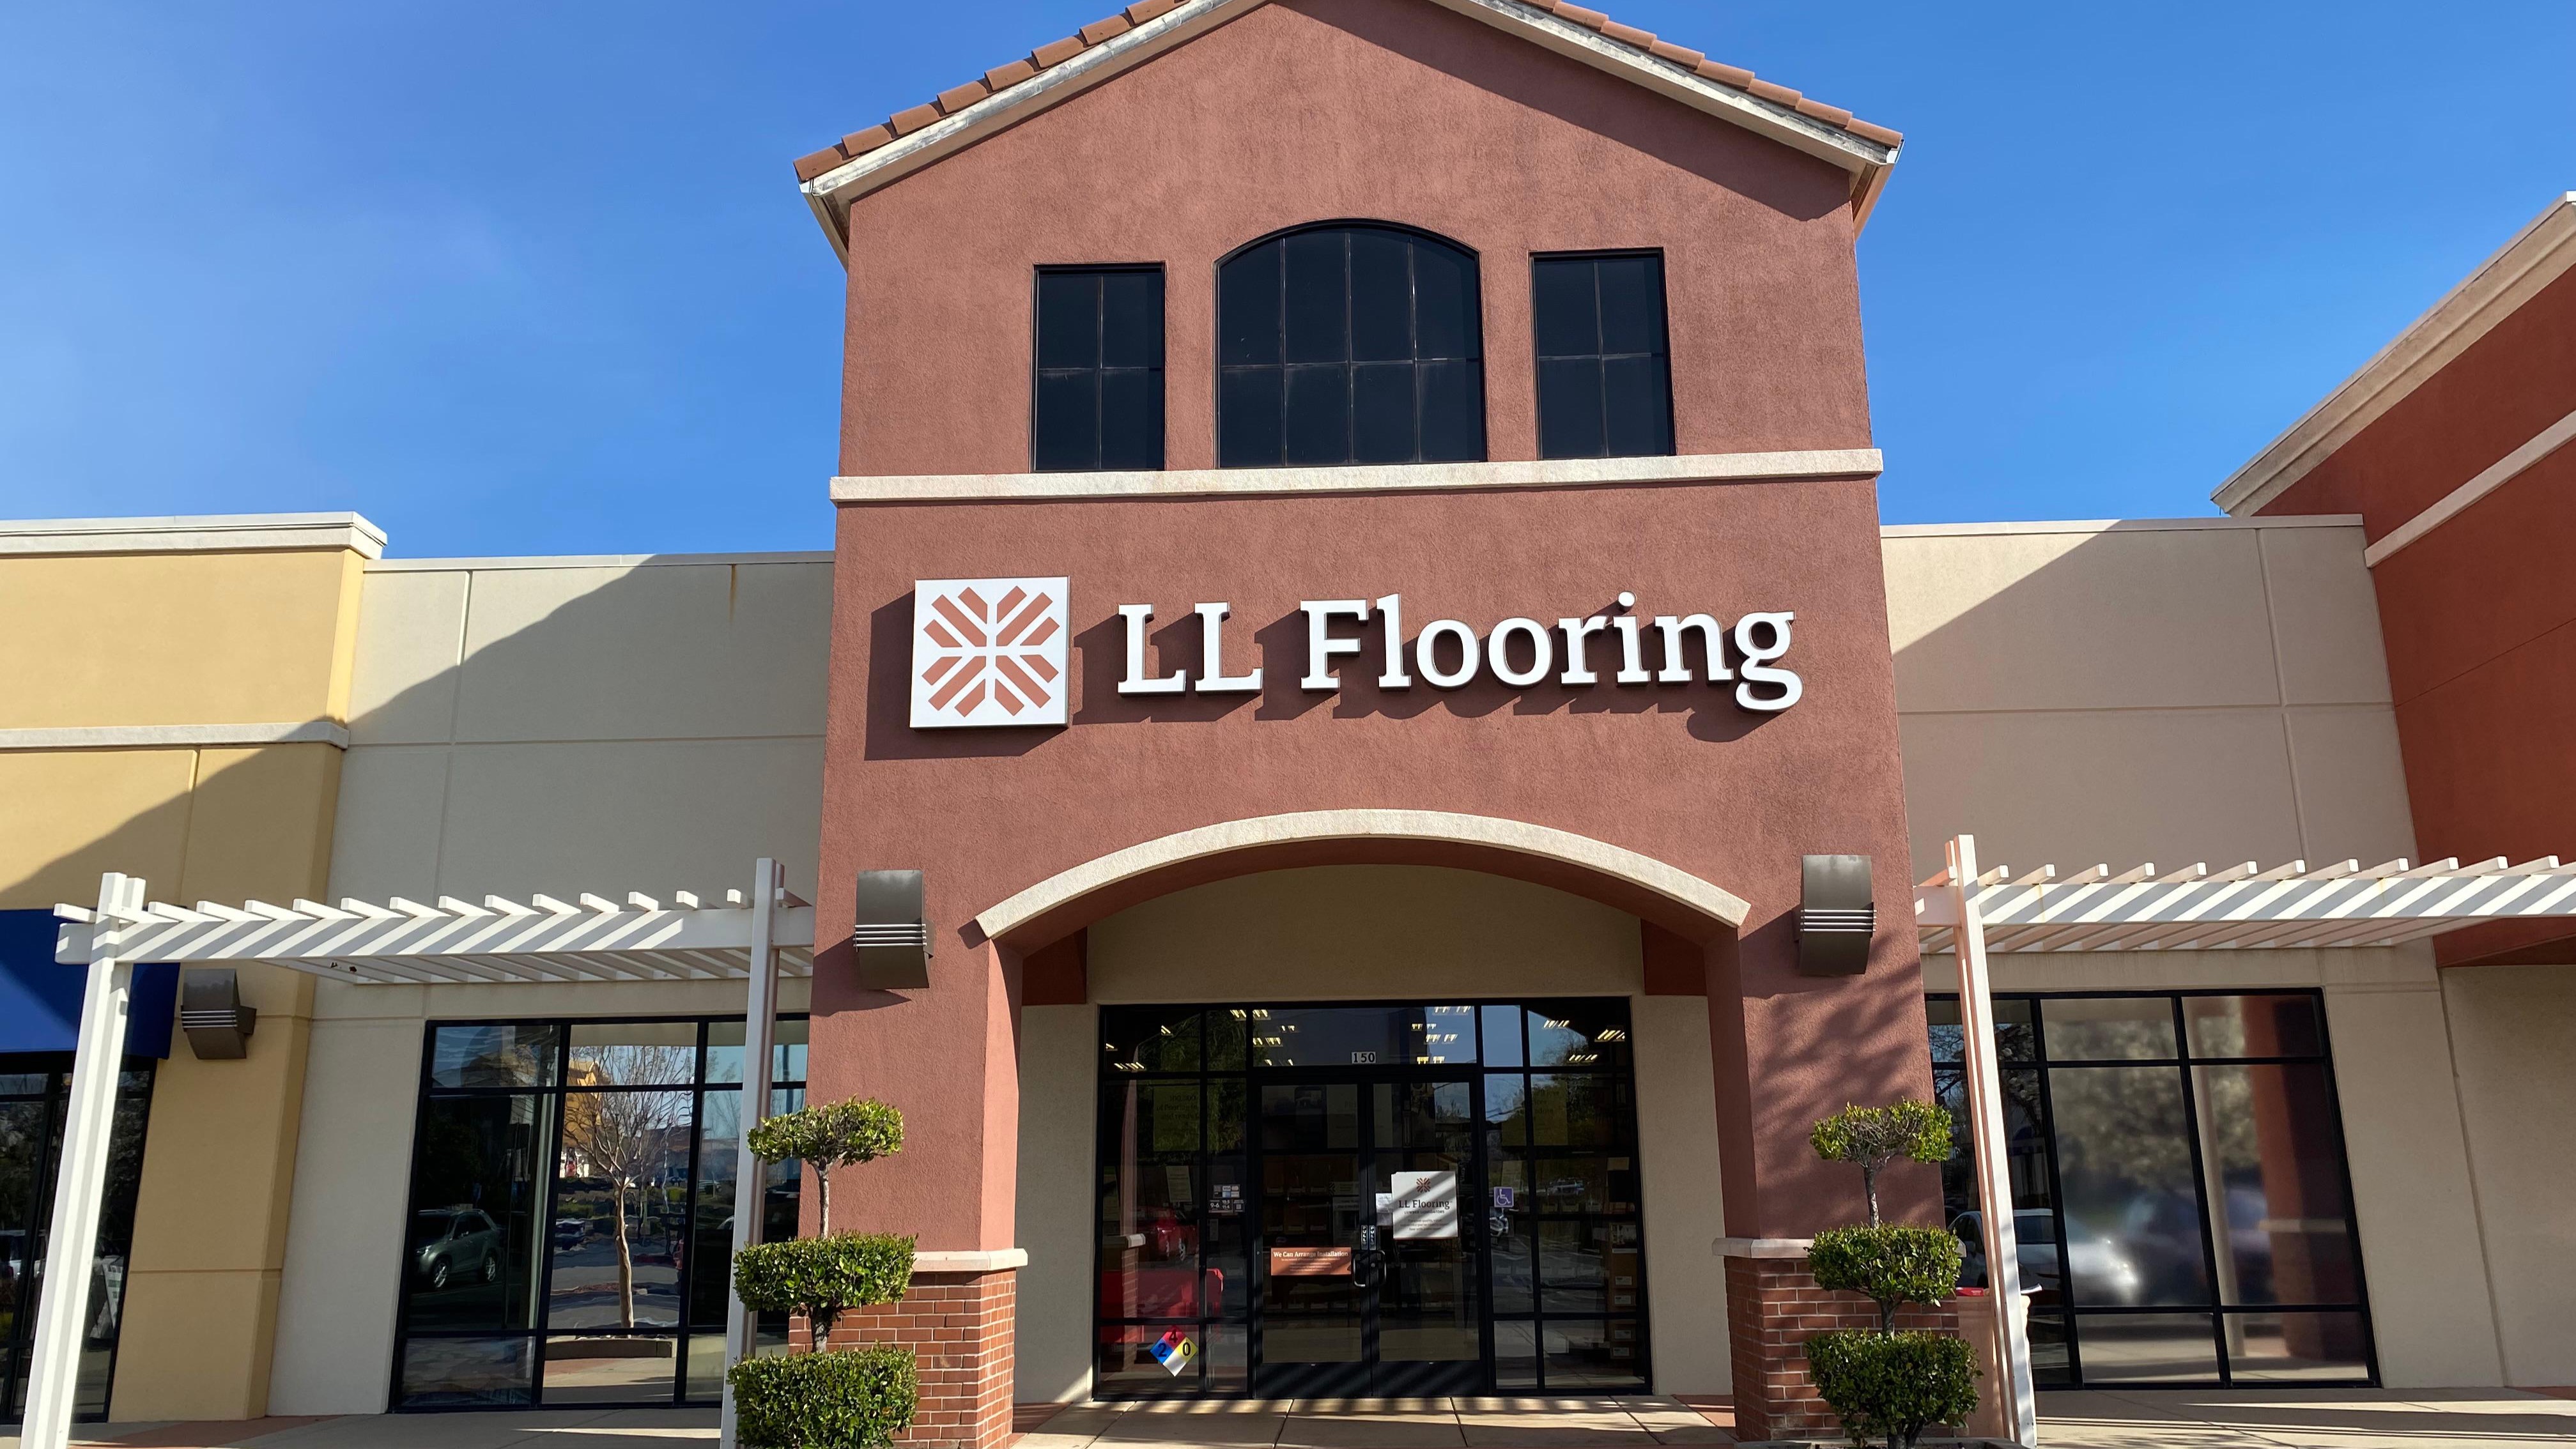 LL Flooring #1328 Roseville | 9400 Fairway Drive | Storefront